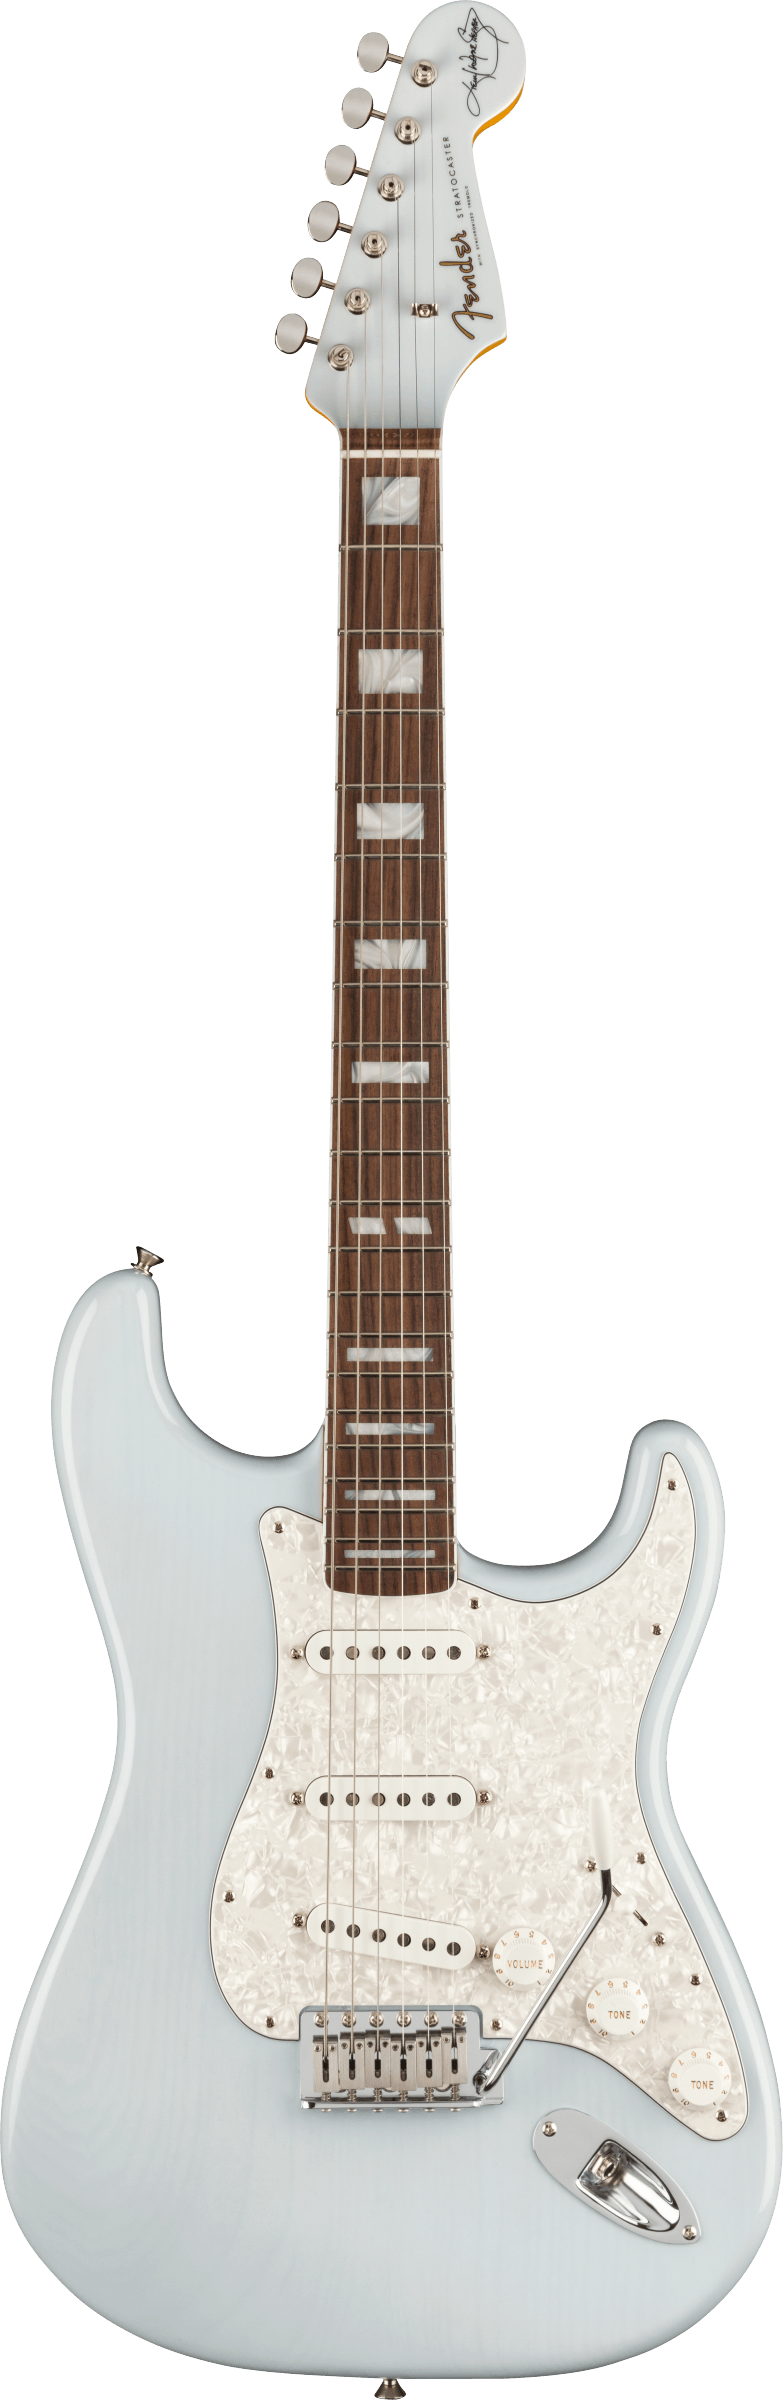 Fender Stratocaster Signature Kenny Wayne Shepherd Transparent Faded Sonic Blue